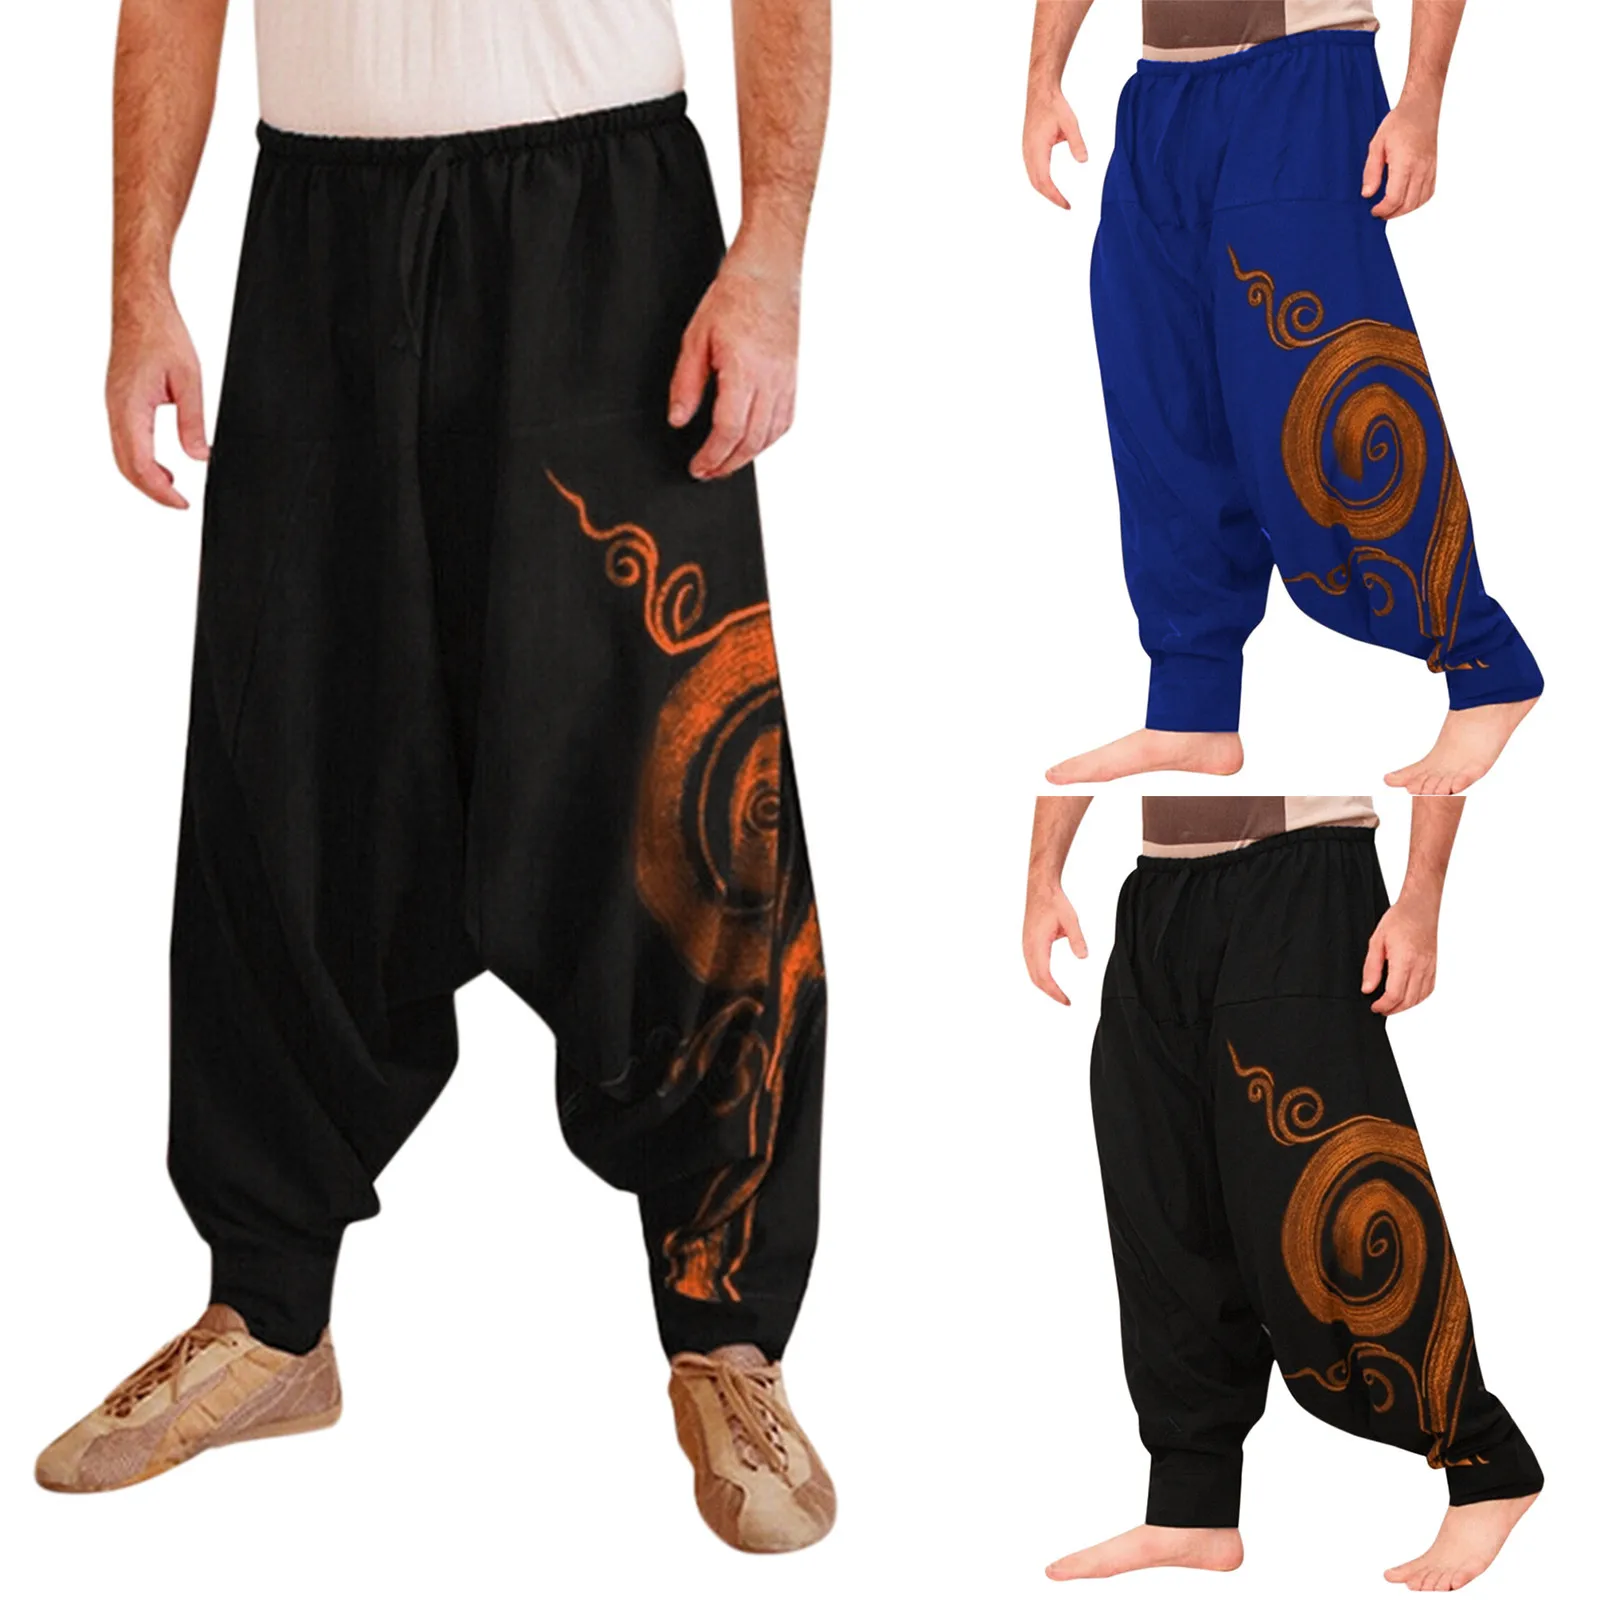 mens jogging bottoms Yoga Overalls Ethnic Loose Casual Pants Sport Men's Drawstring Trouser Printed Men's pants Men's trousers Sweatpants sports pants